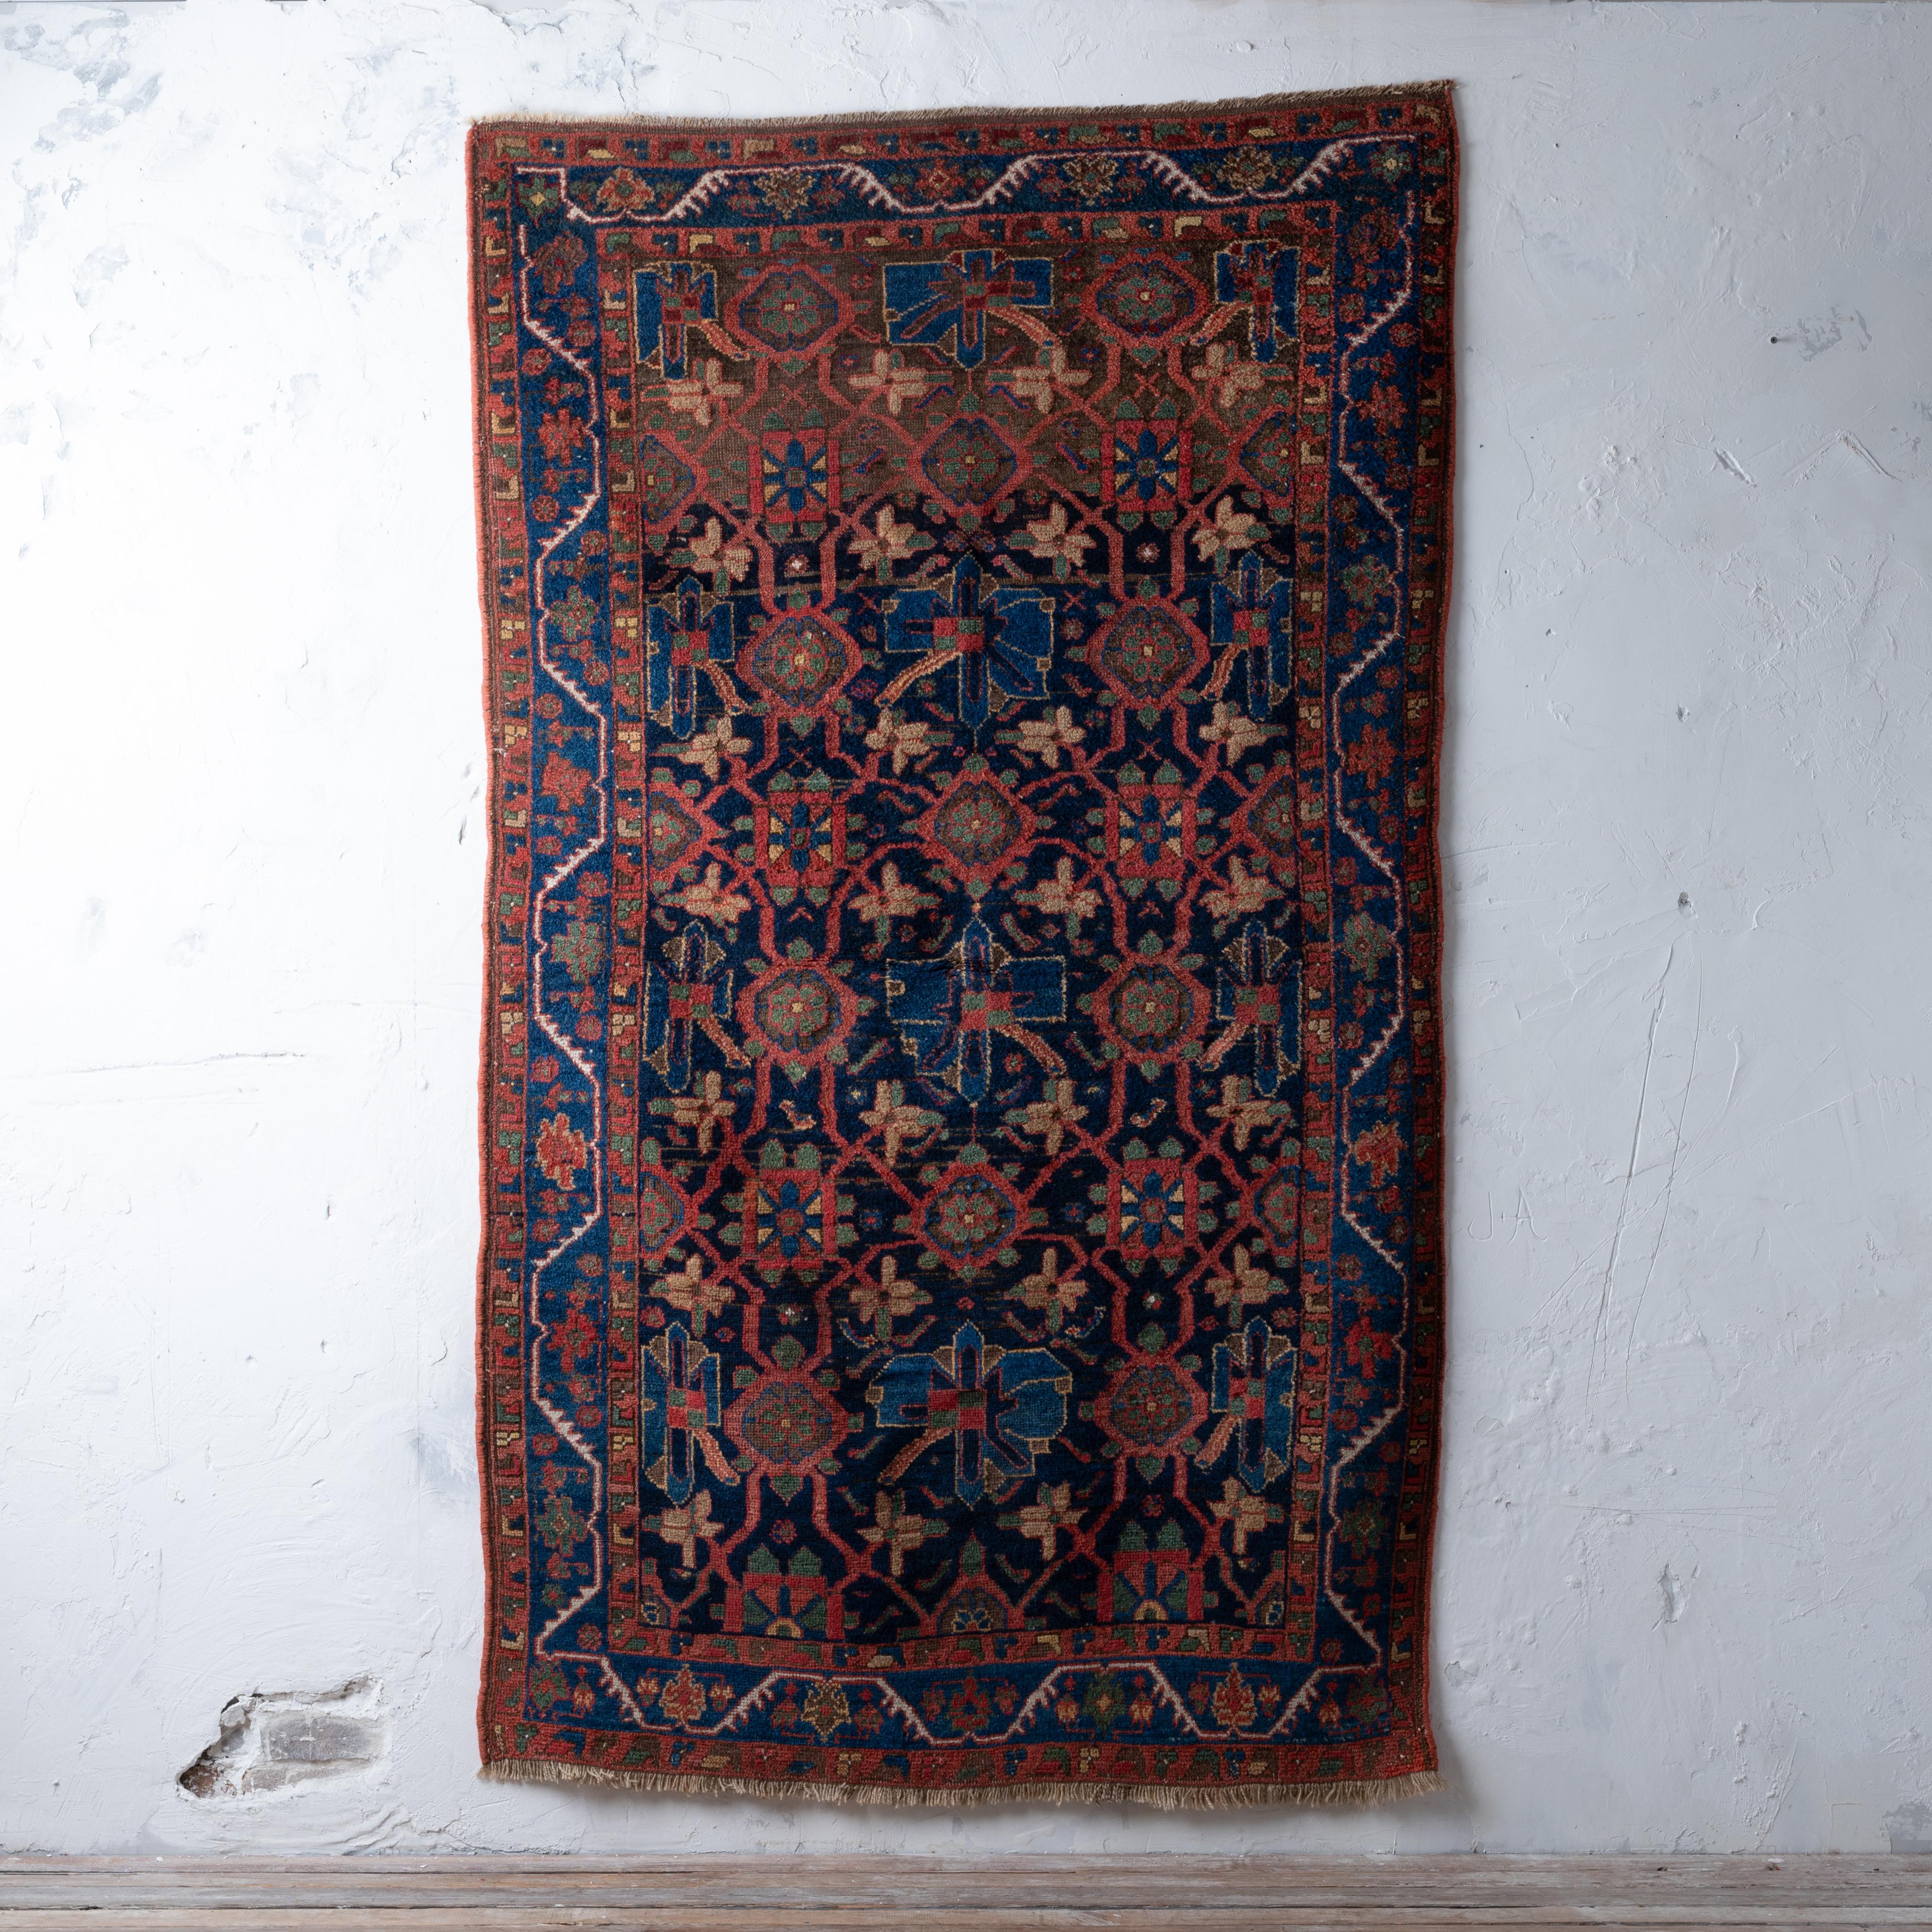 A Koliya’i rug with mina khani lattice field, circa 1920s.

51 by 87 inches

